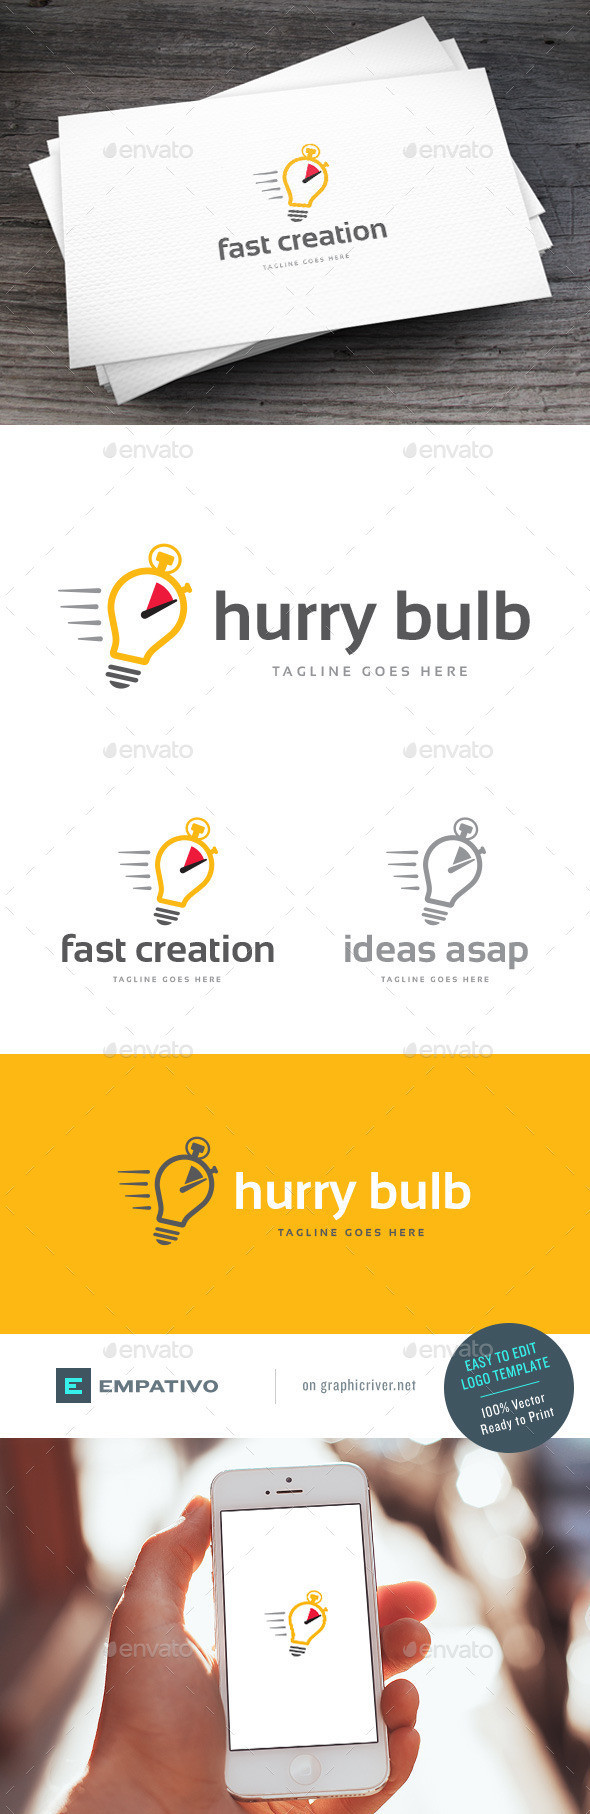 Hurry bulb logo template